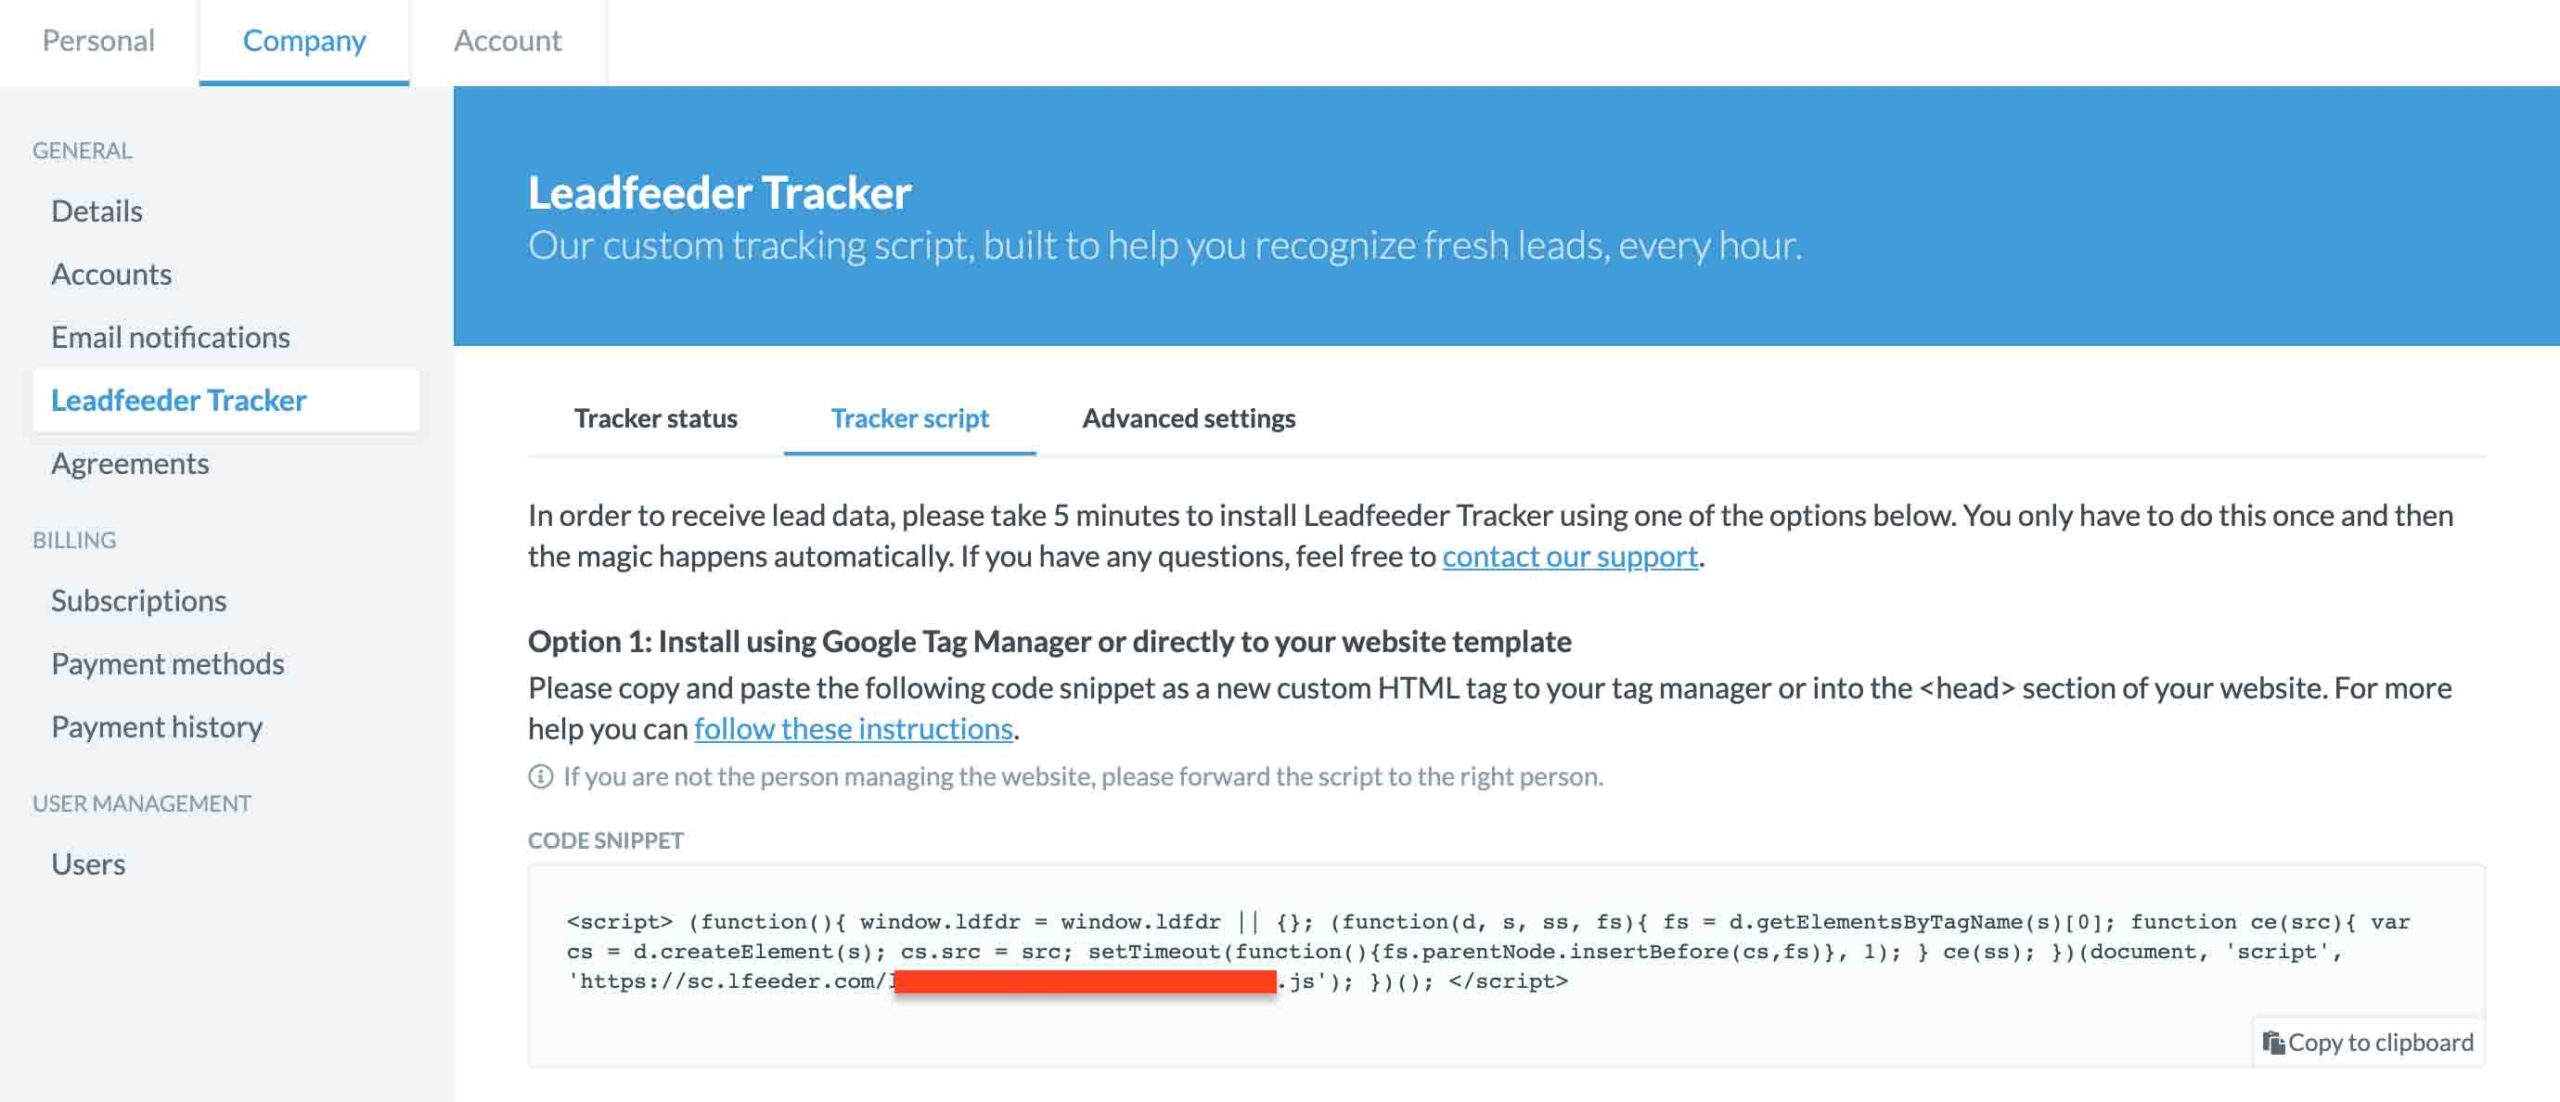 Leadfeeder-Tracker-Script-scaled